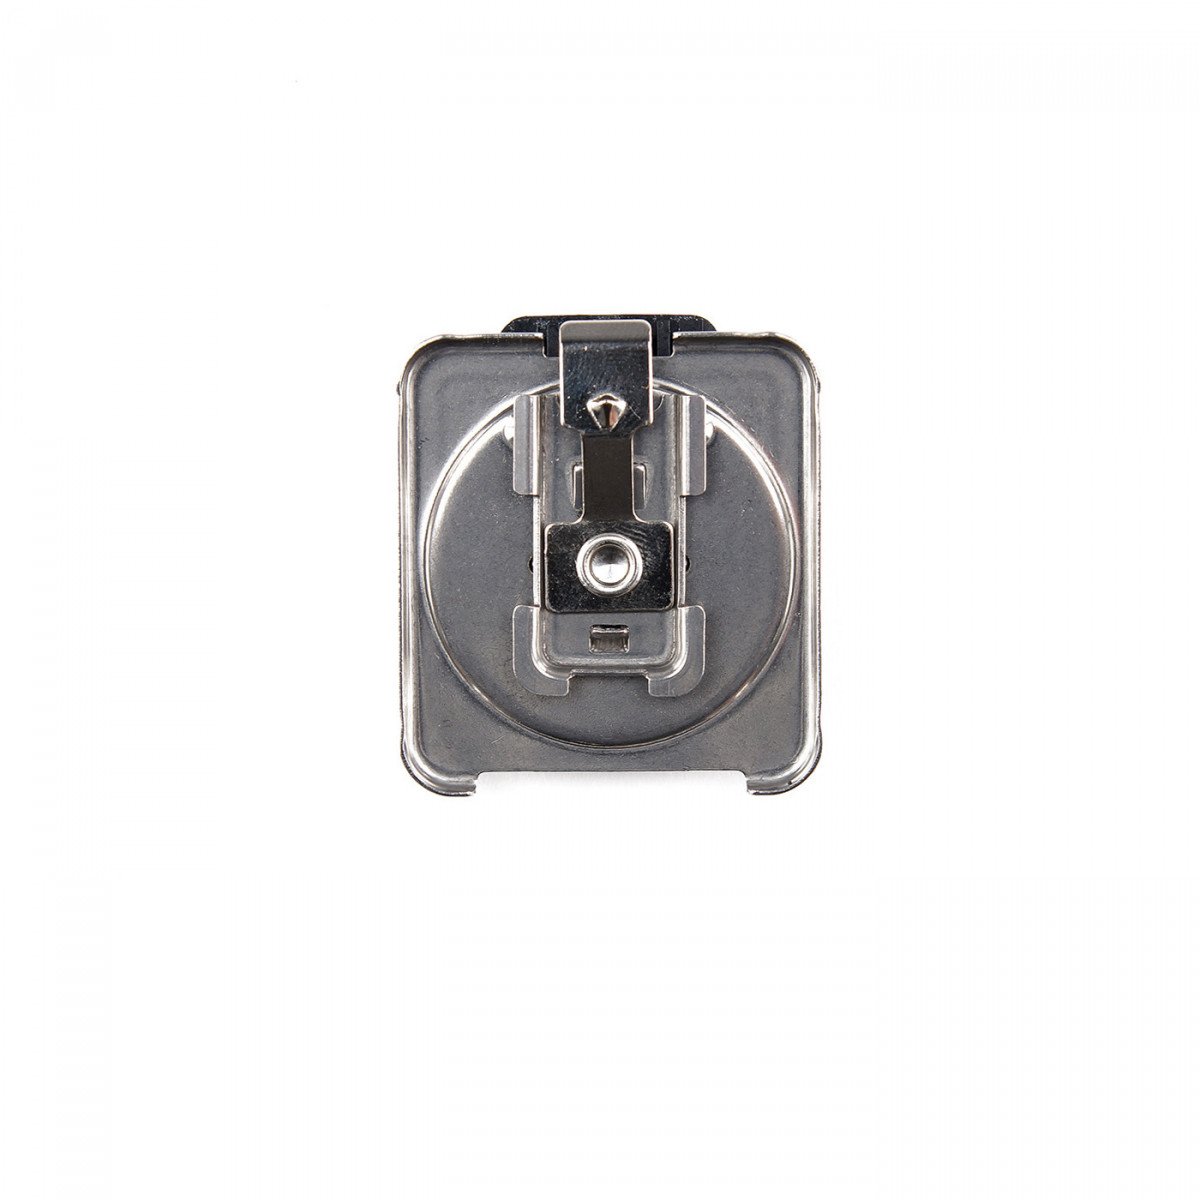 SEPURA mounting clip for Sepura speaker microphone standard 700-00677